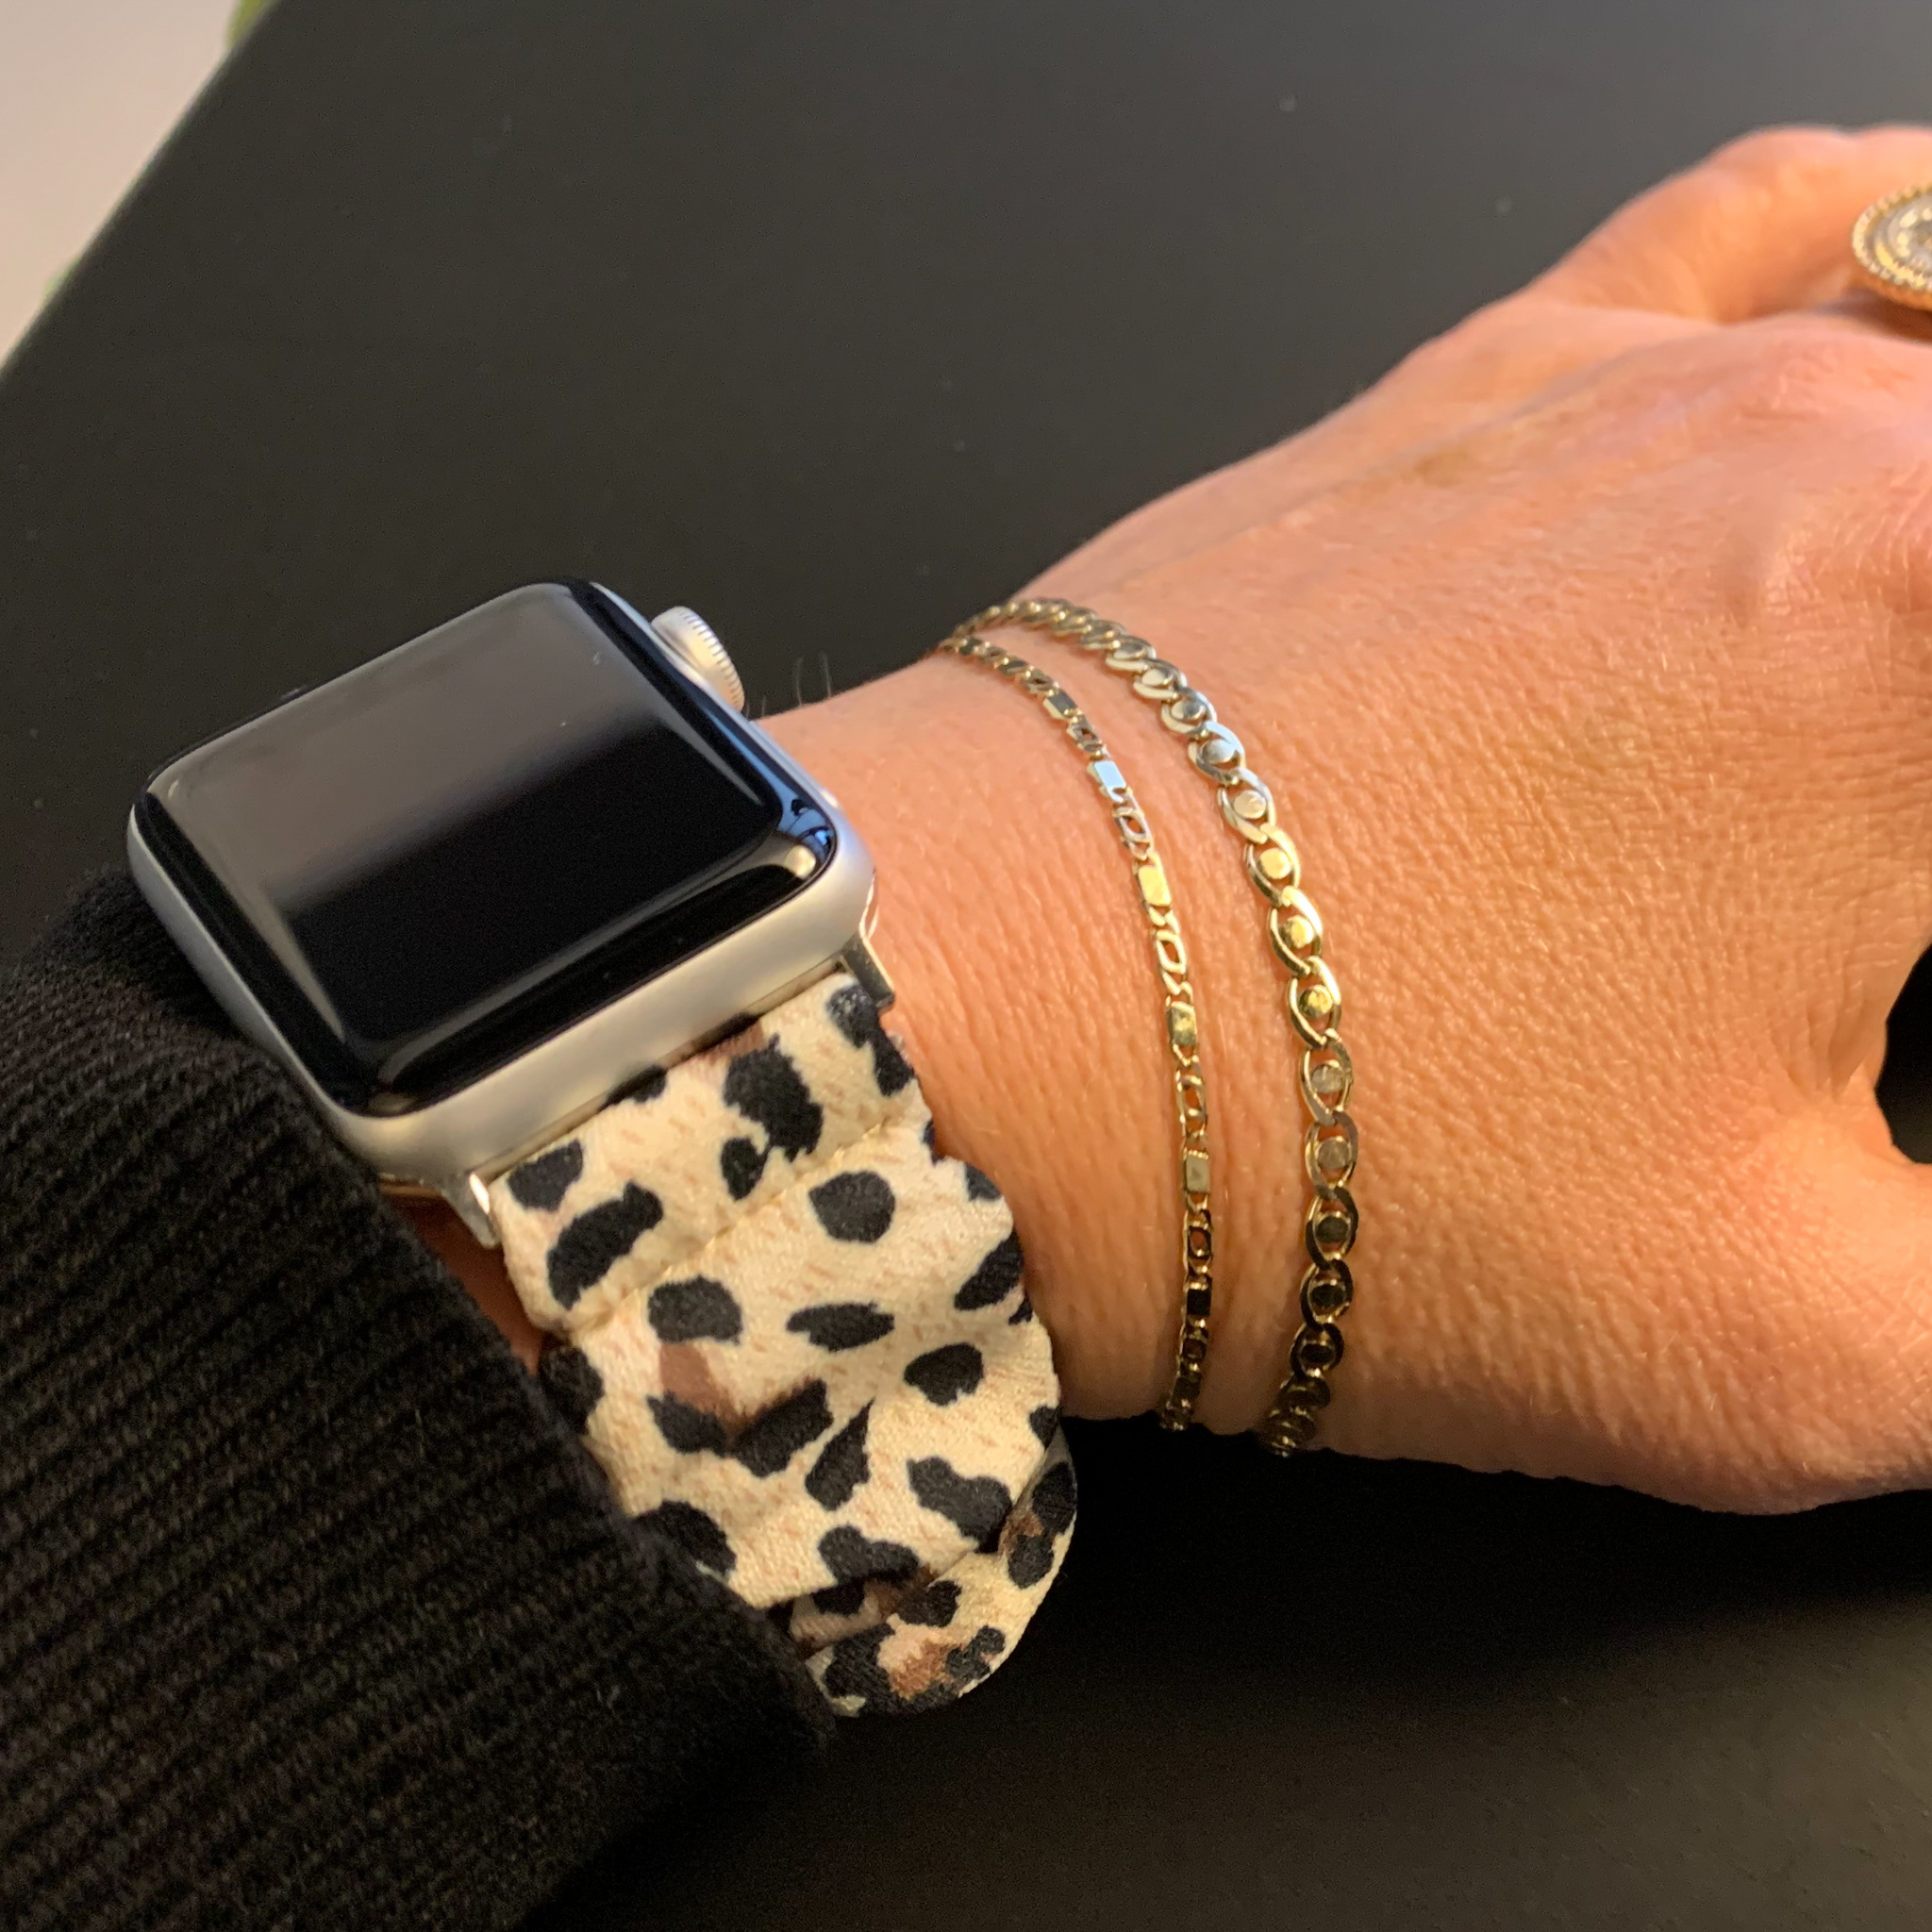 Apple Watch Nylon scrunchie Armband - Panther